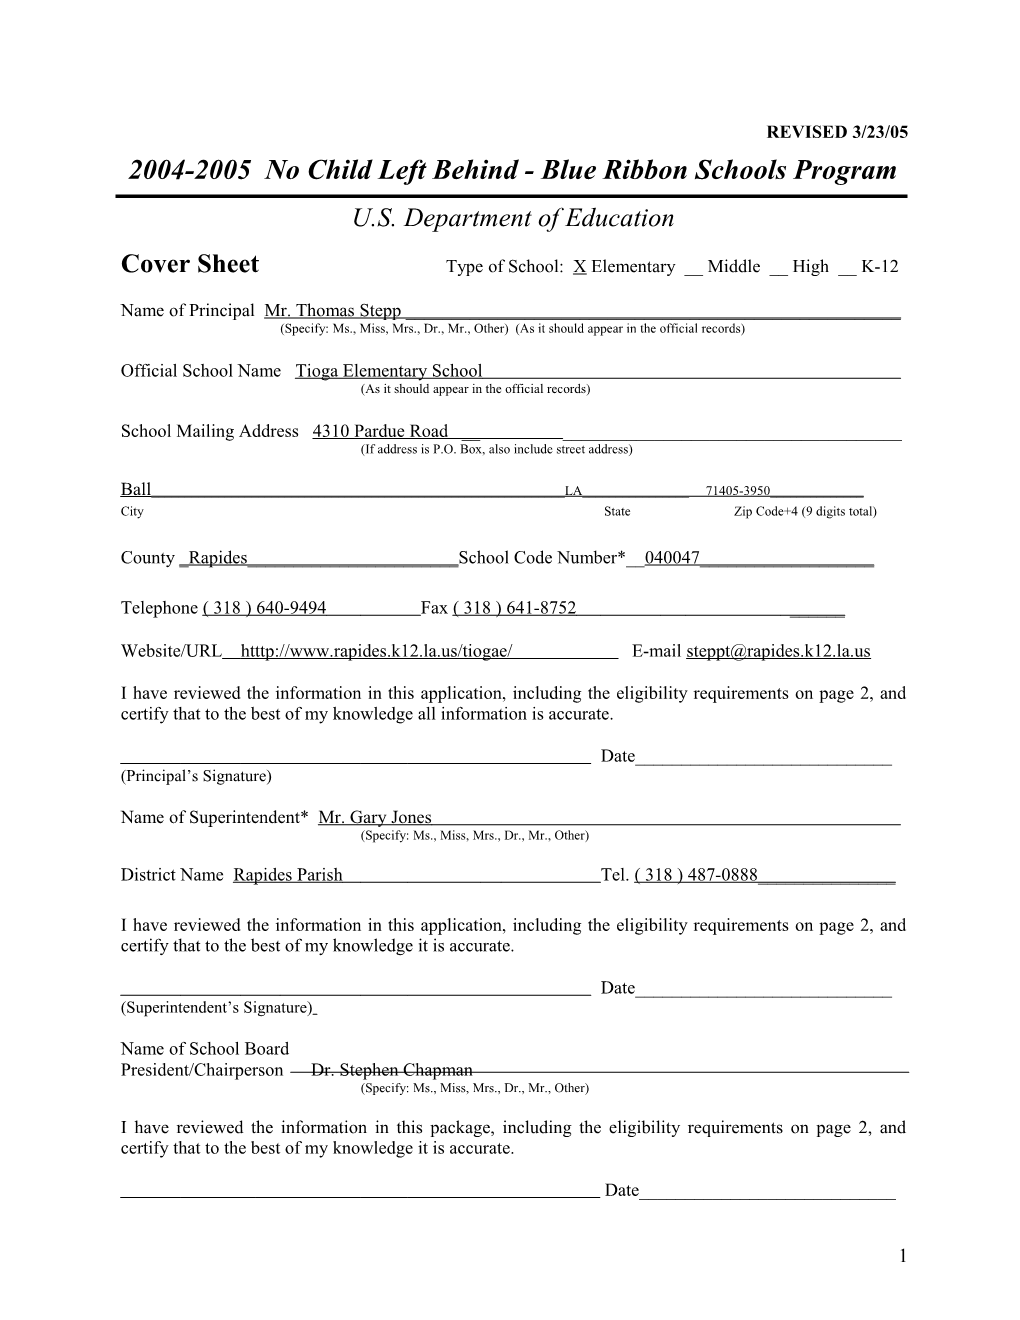 Tioga Elementary School Application: 2004-2005, No Child Left Behind - Blue Ribbon Schools